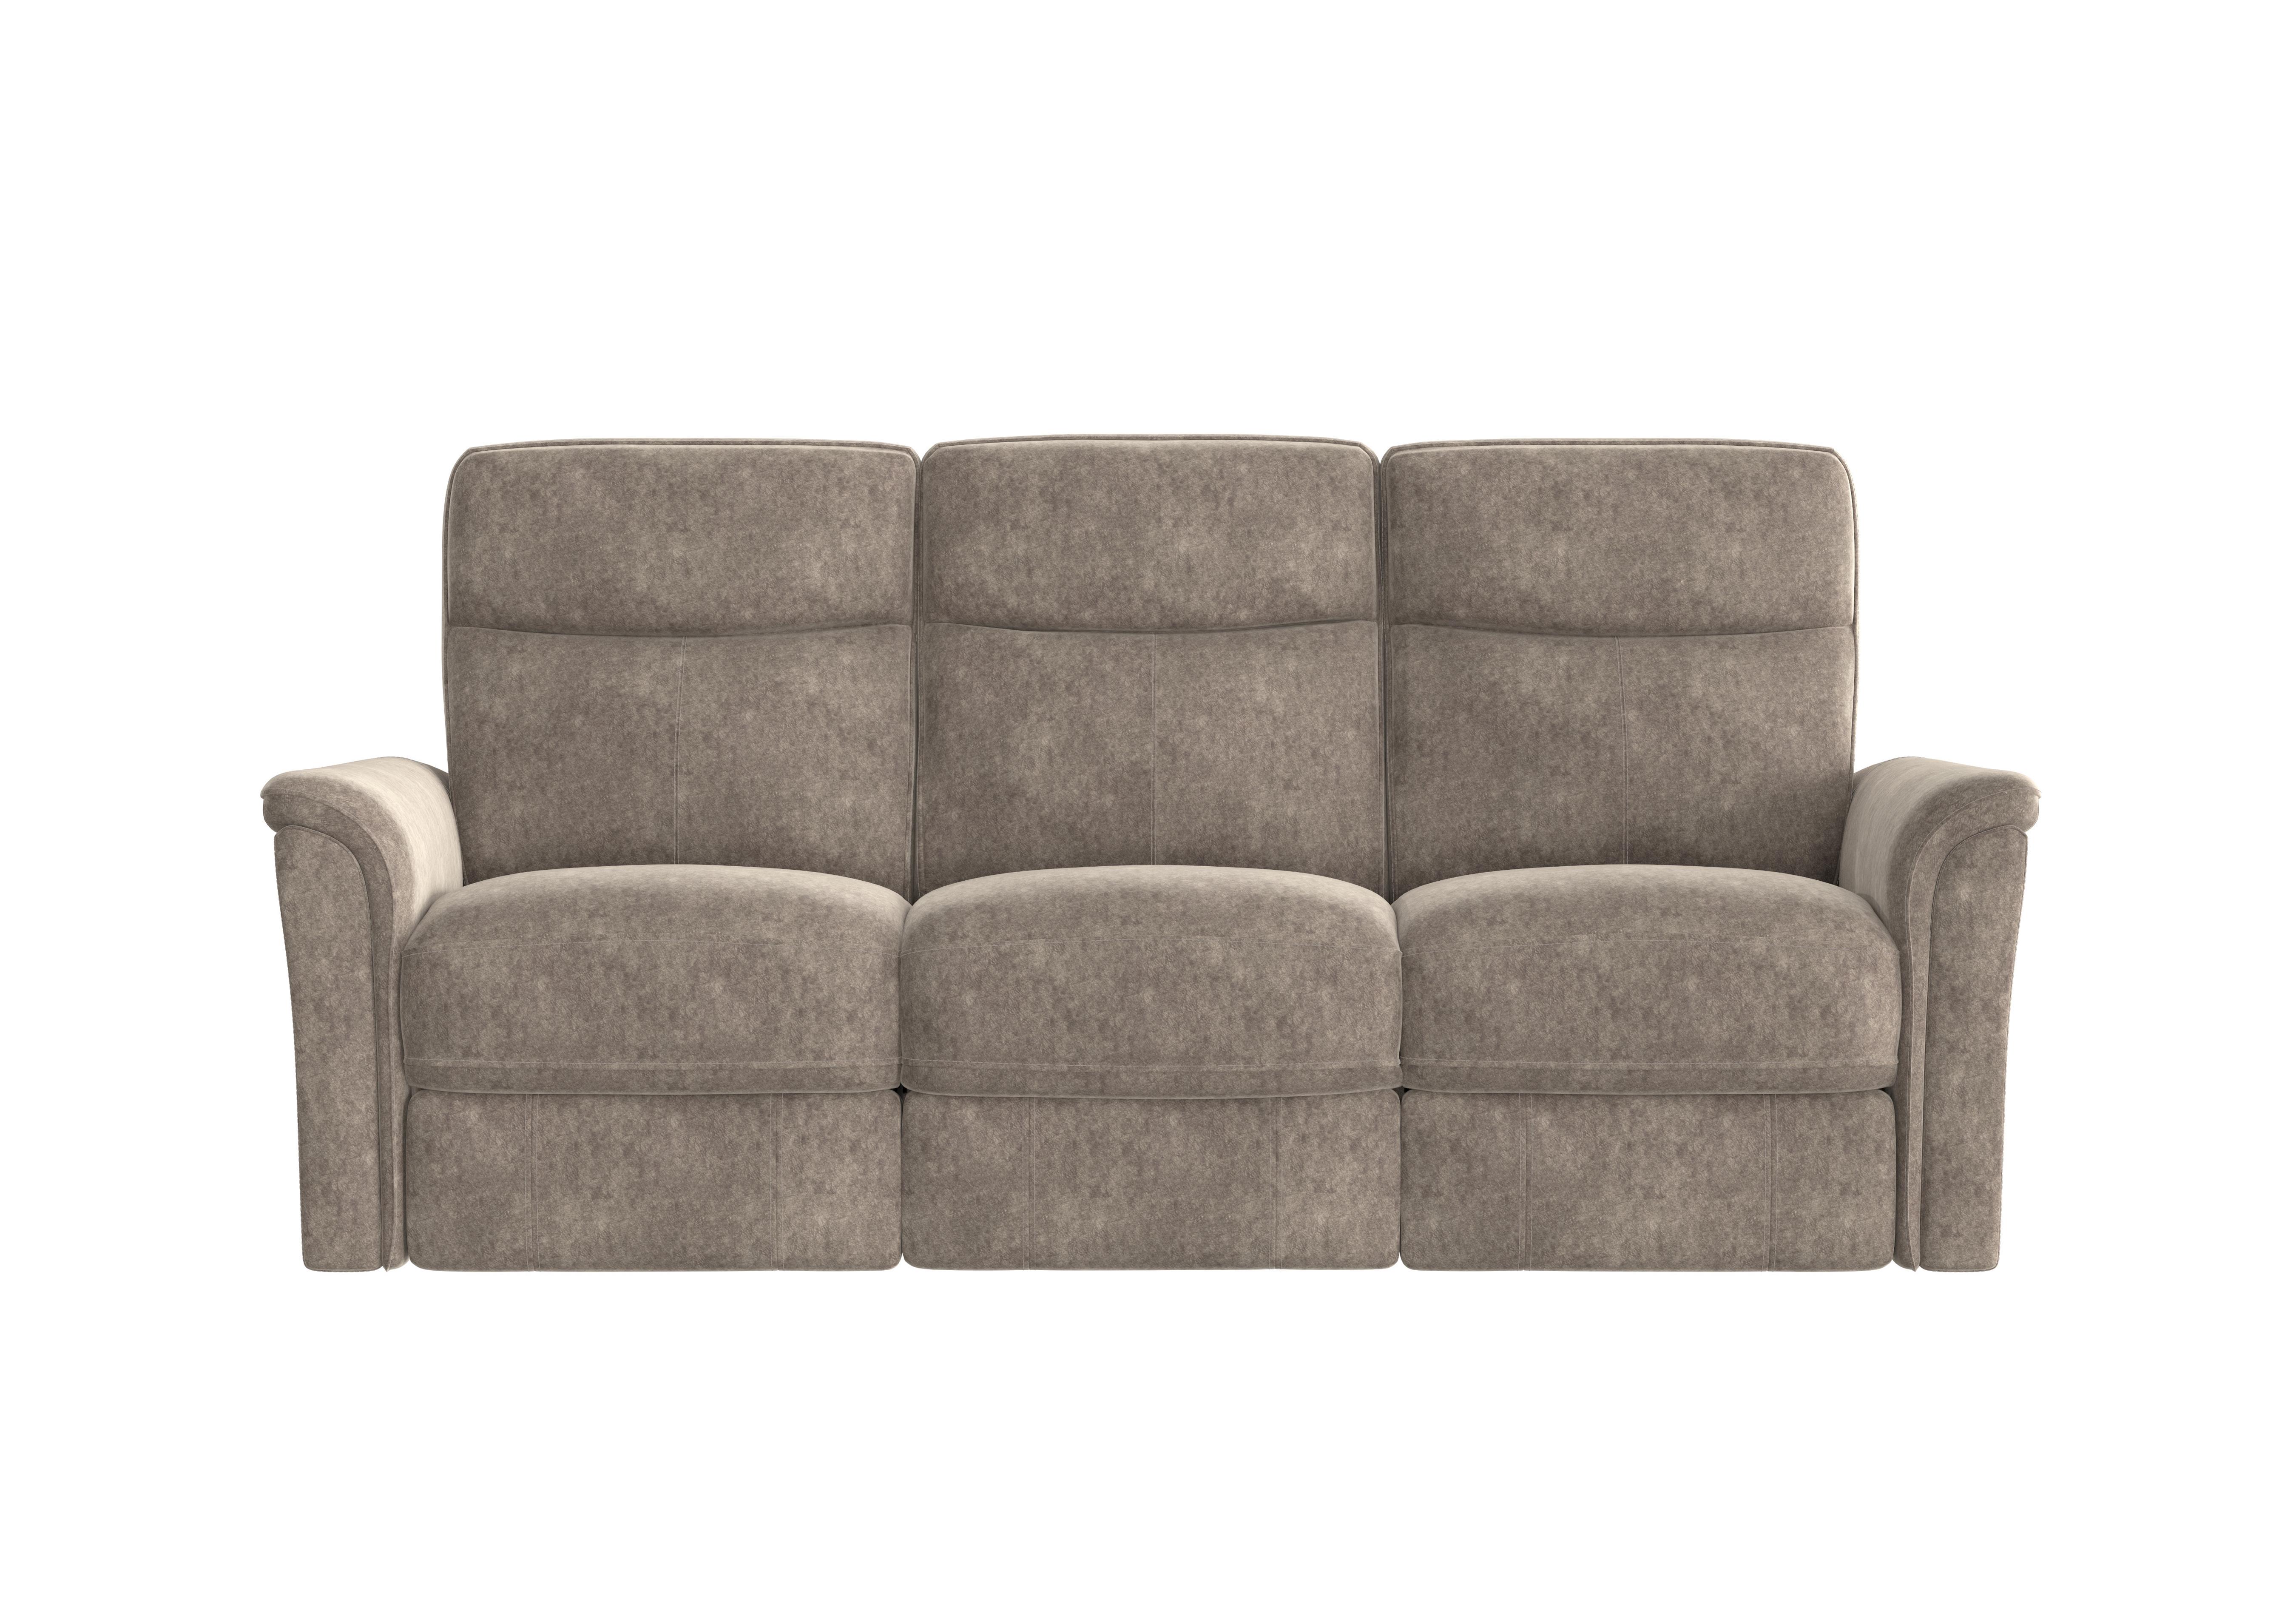 Piccolo 3 Seater Fabric Sofa in Bfa-Bnn-R29 Fv1 Mink on Furniture Village